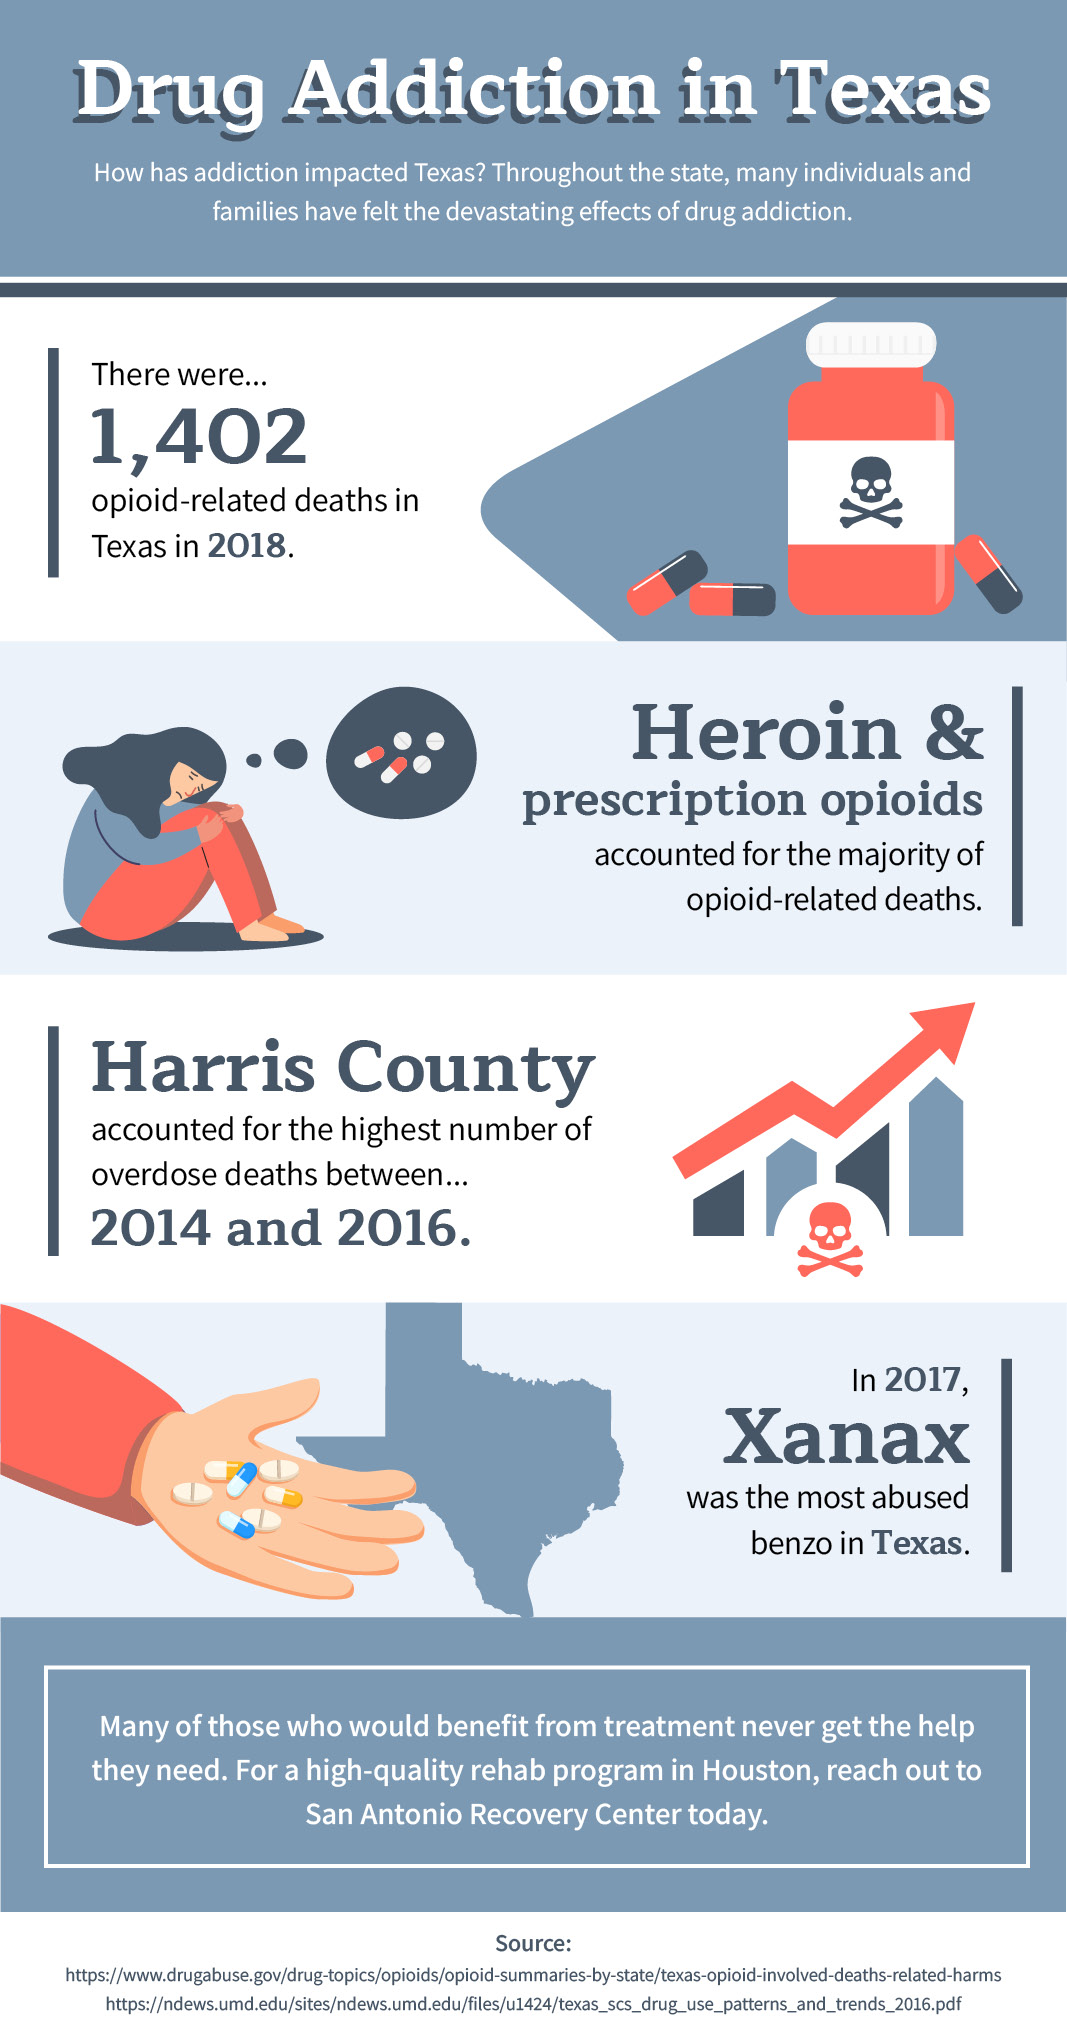 Drug Addiction in Texas information